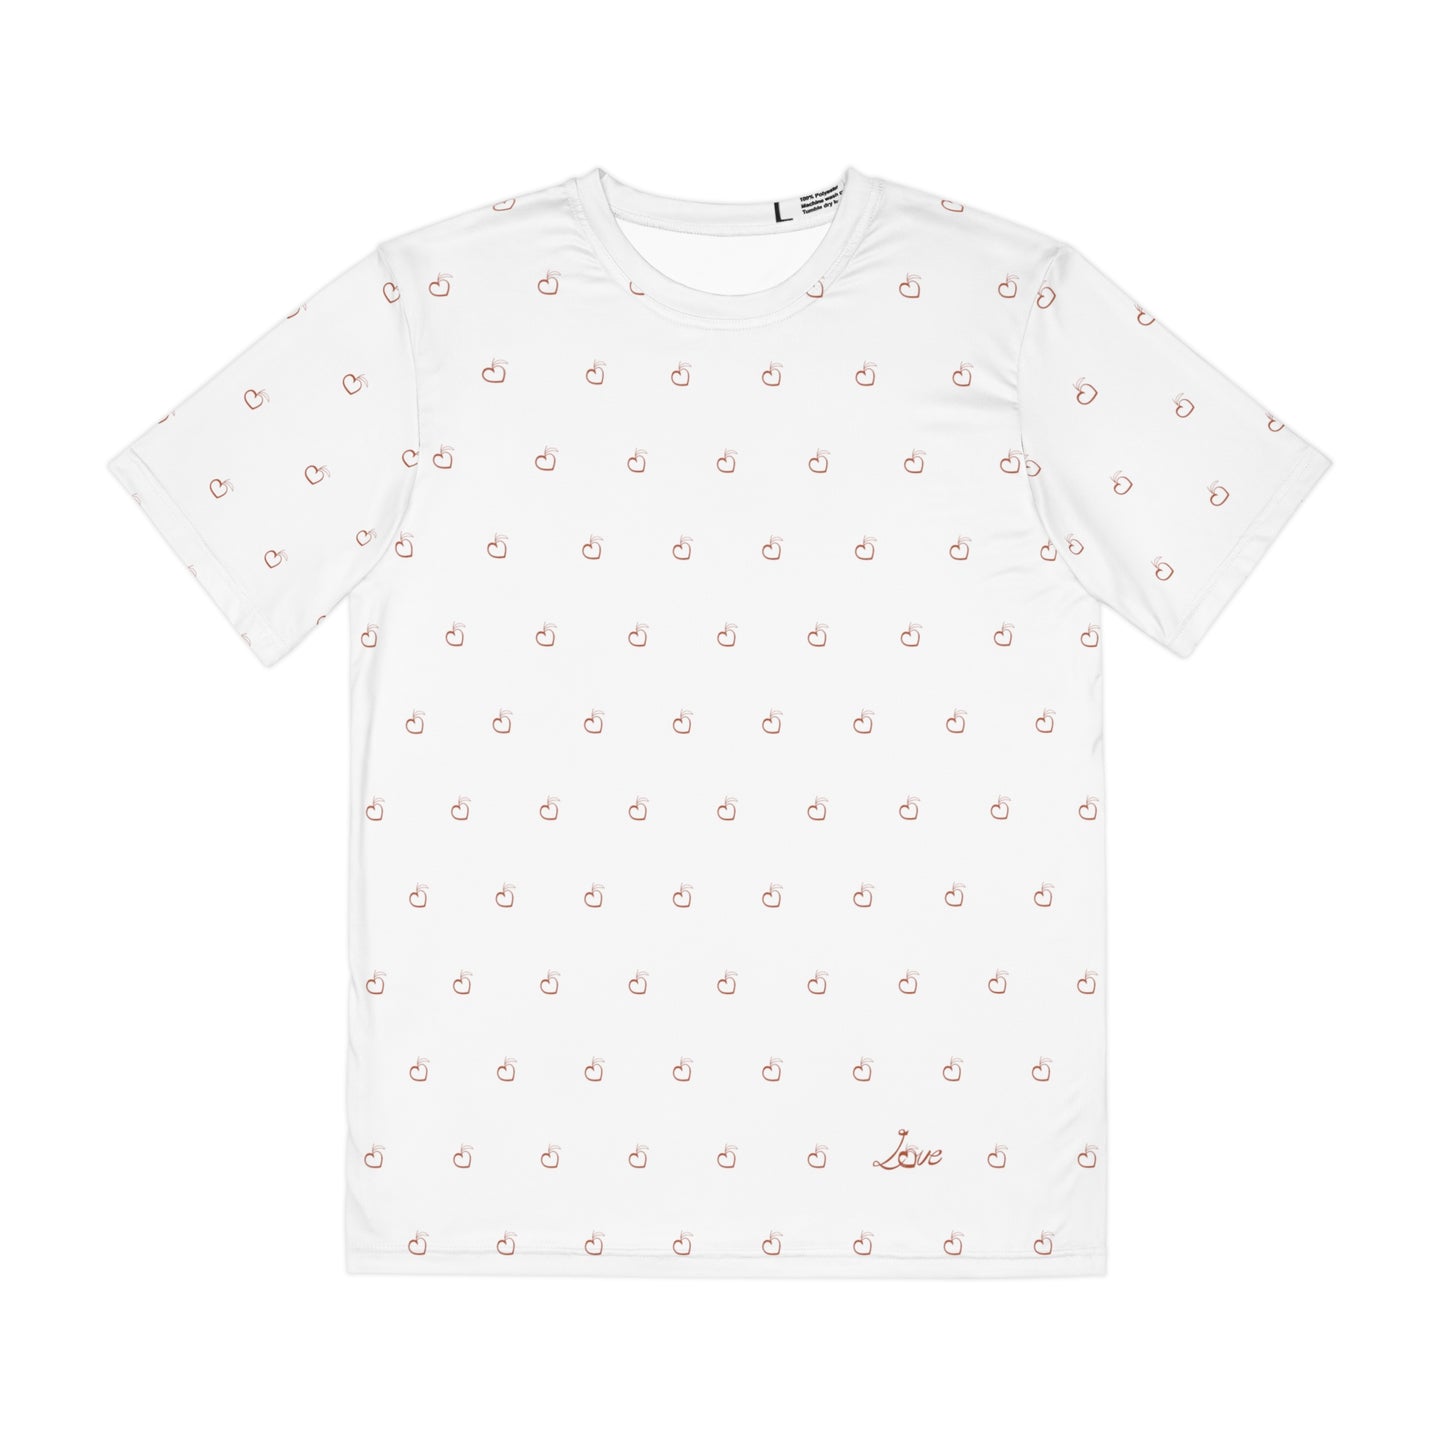 Love Men's T-Shirt (White)